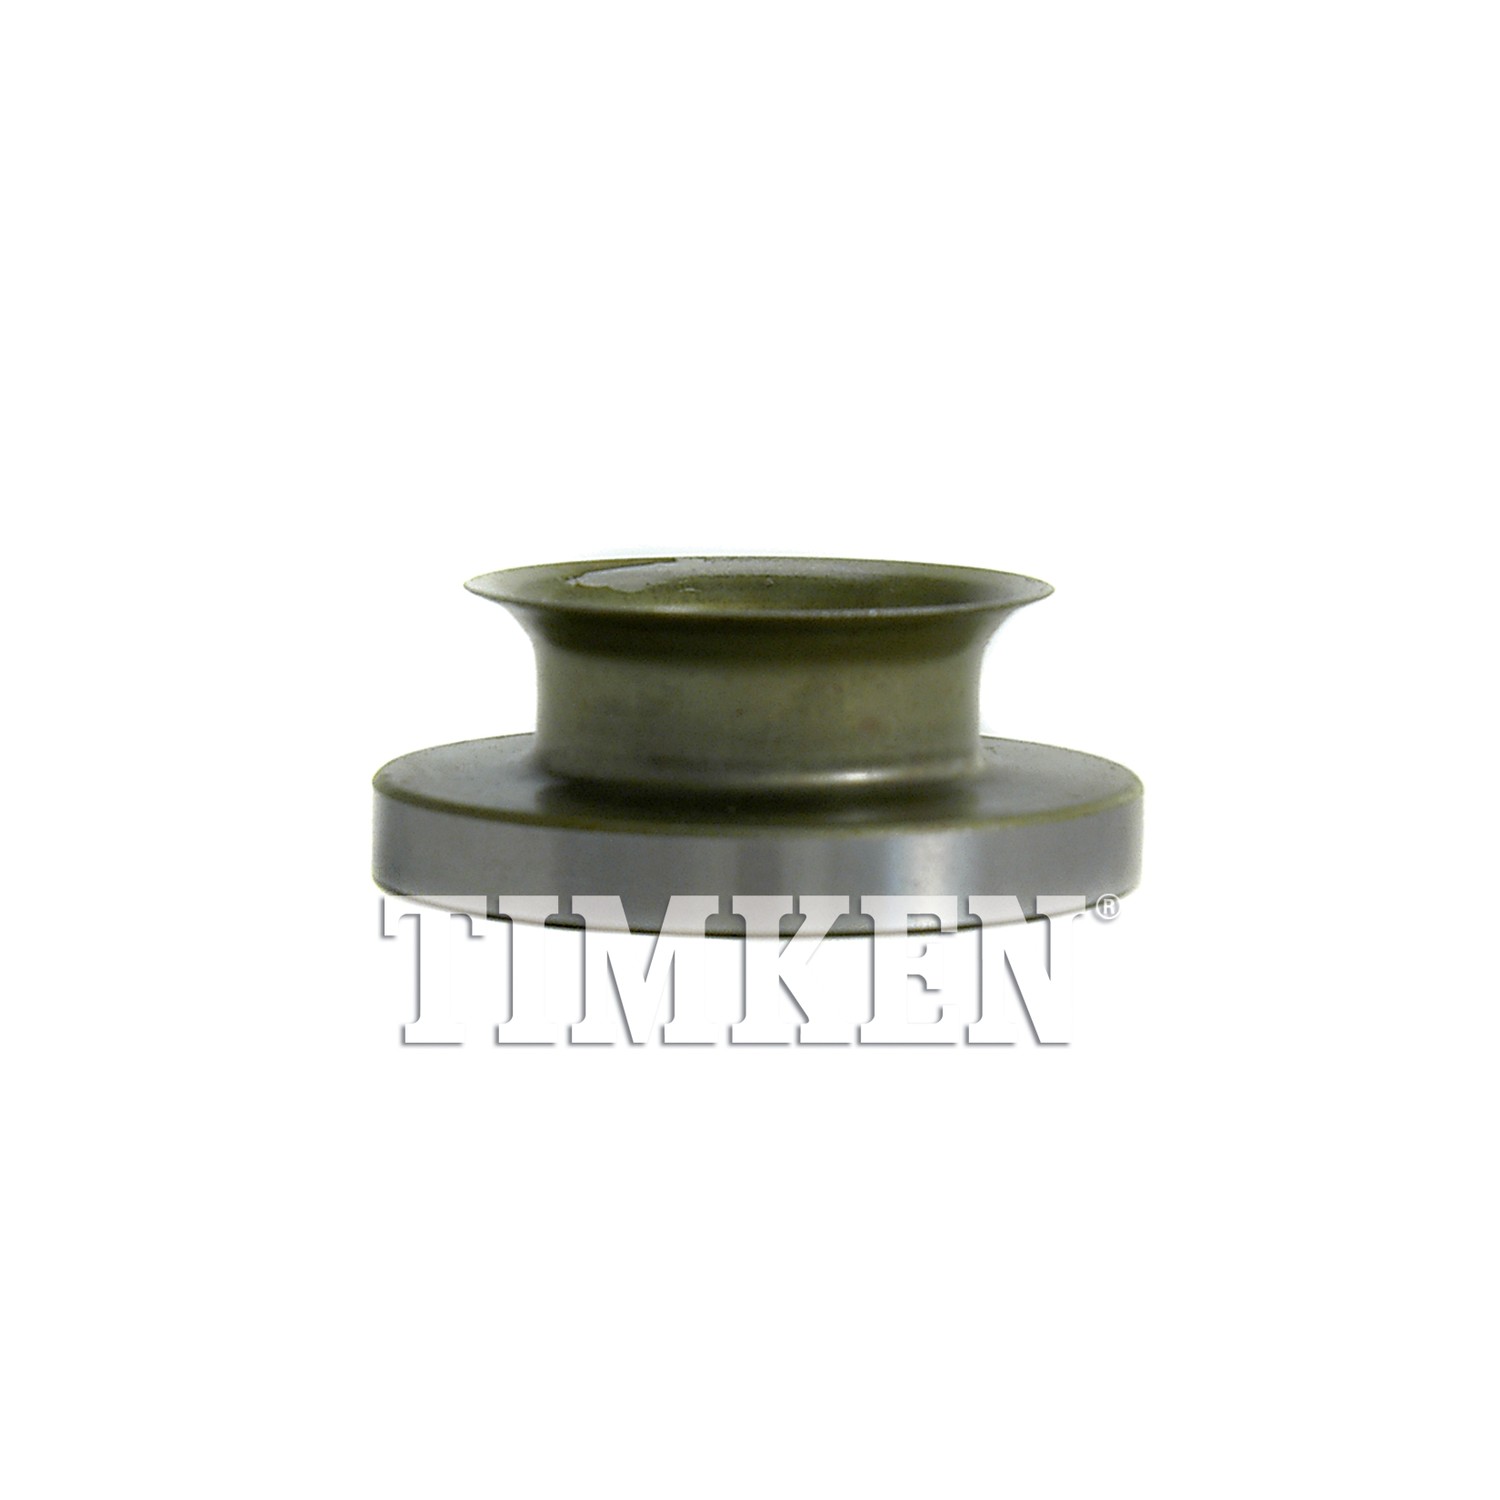 TIMKEN - Differential Seal - TIM 2300